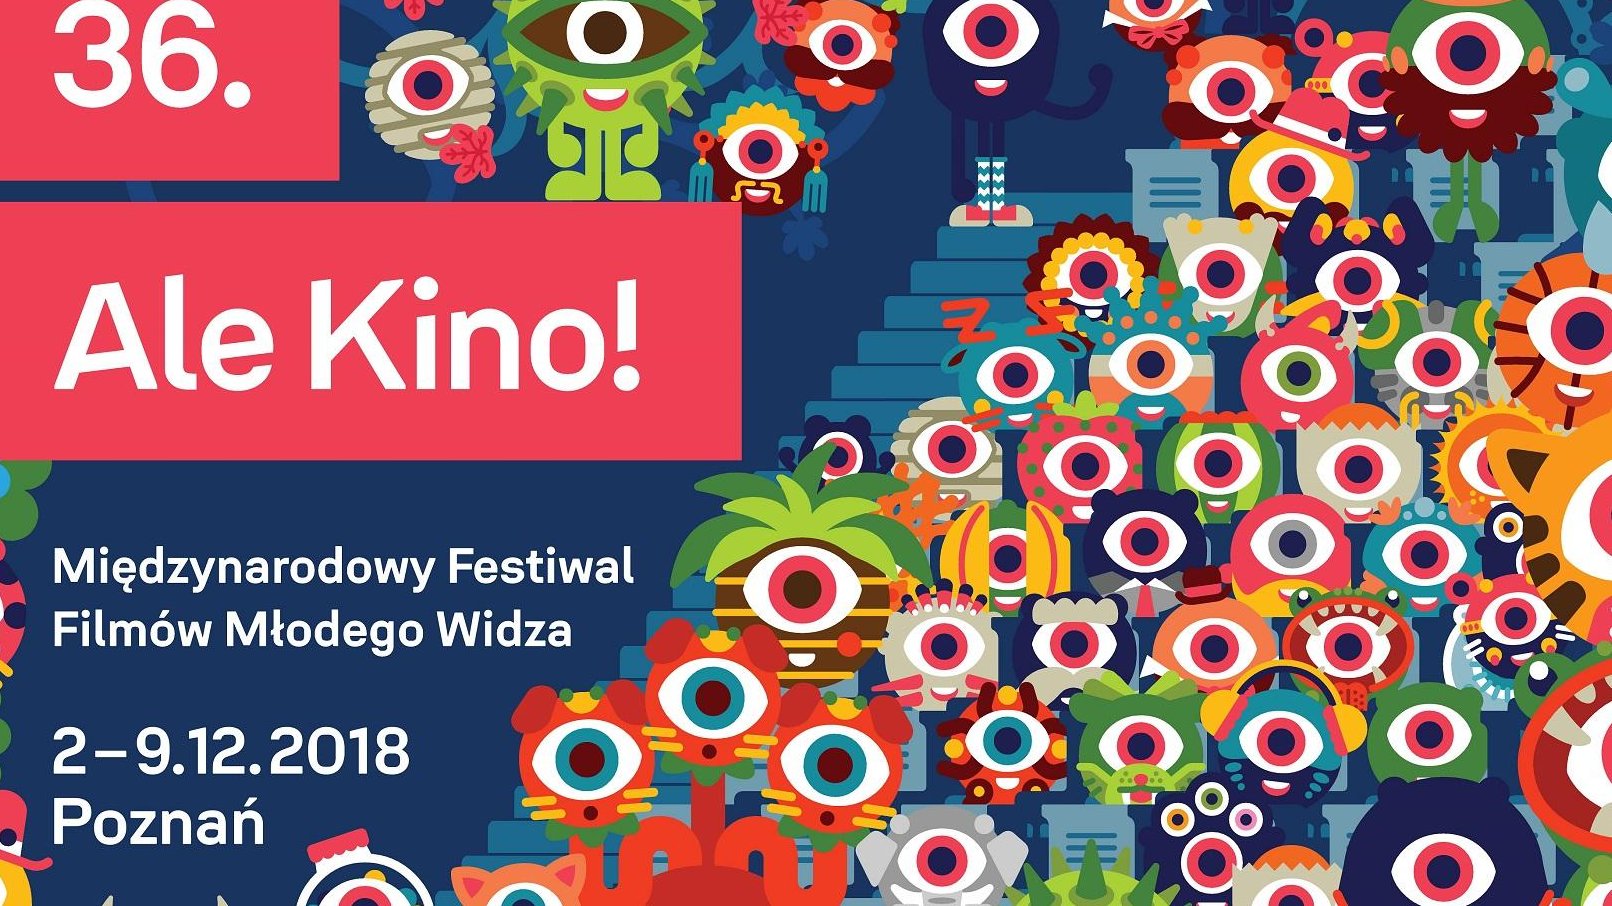 Festiwal "Ale Kino"